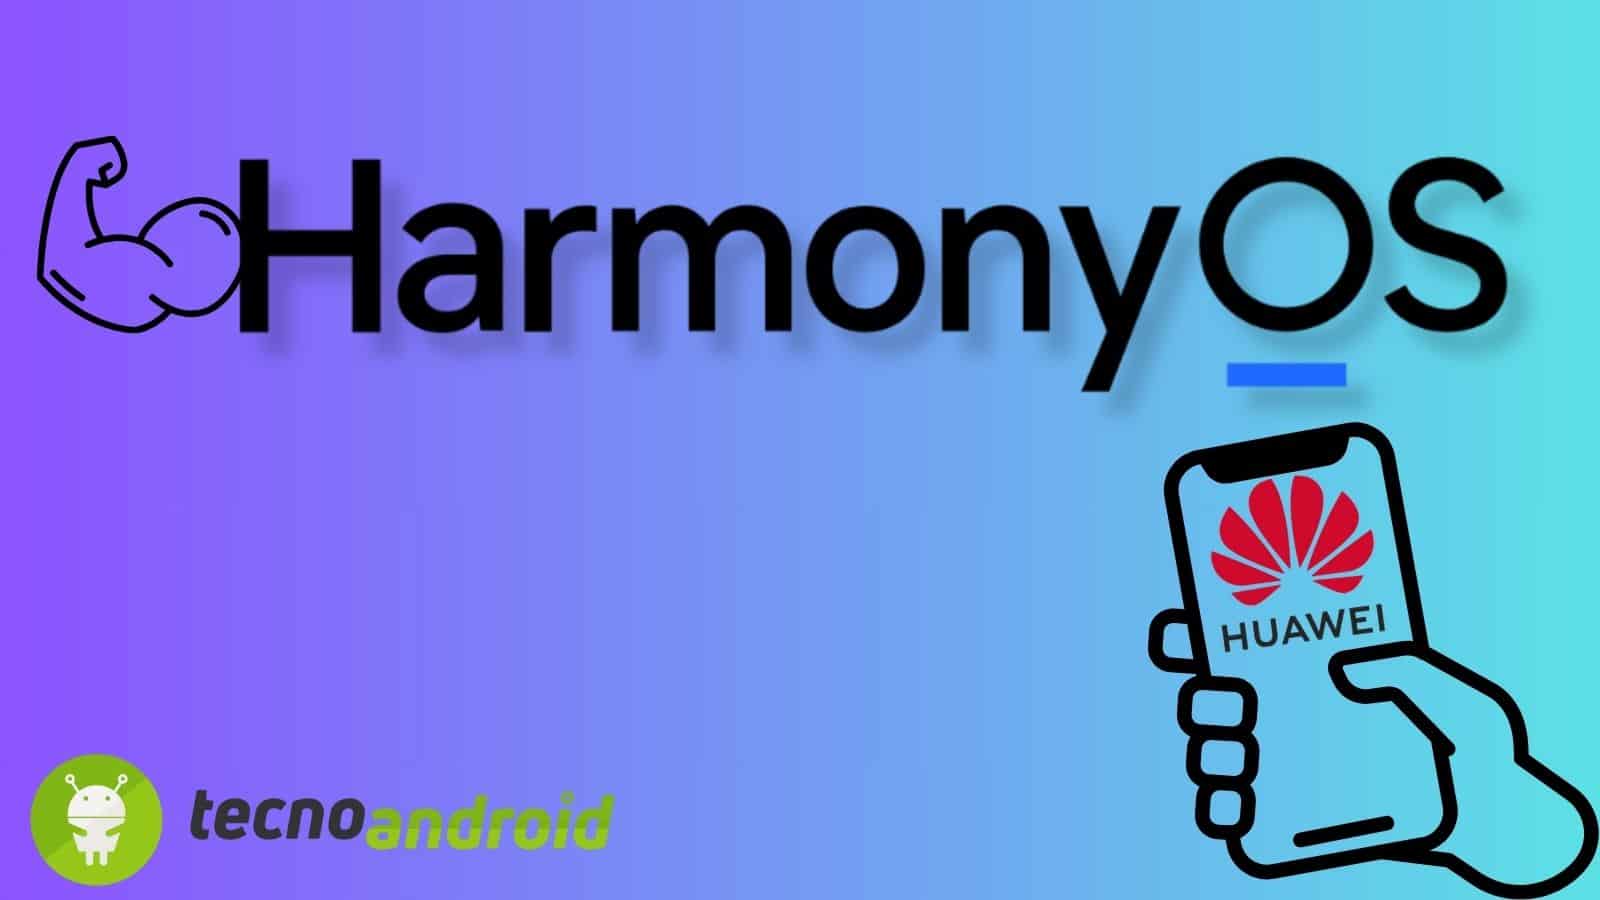 Huawei: il sistema operativo HarmonyOS sfida le grandi società